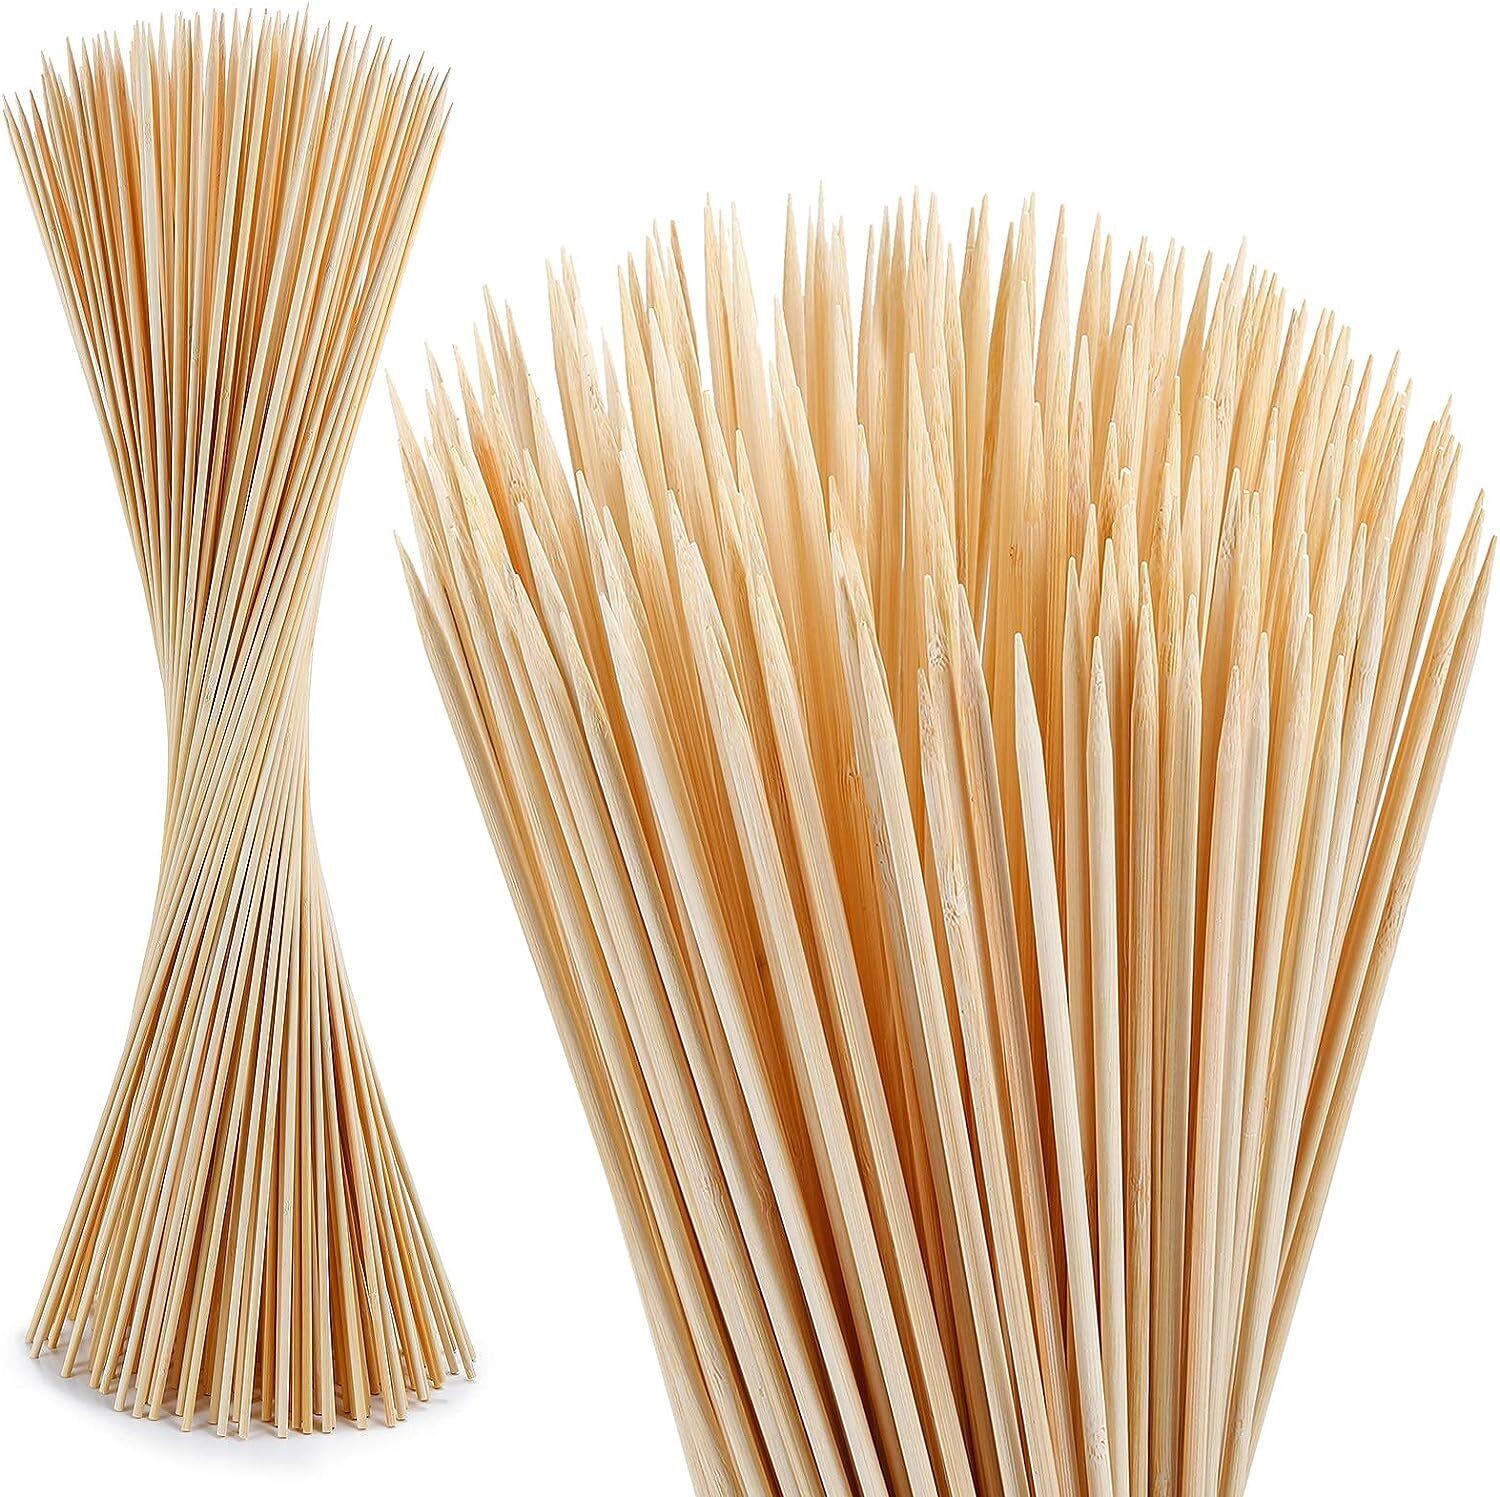 200 PCS Bamboo Marshmallow Roasting Sticks  SMores